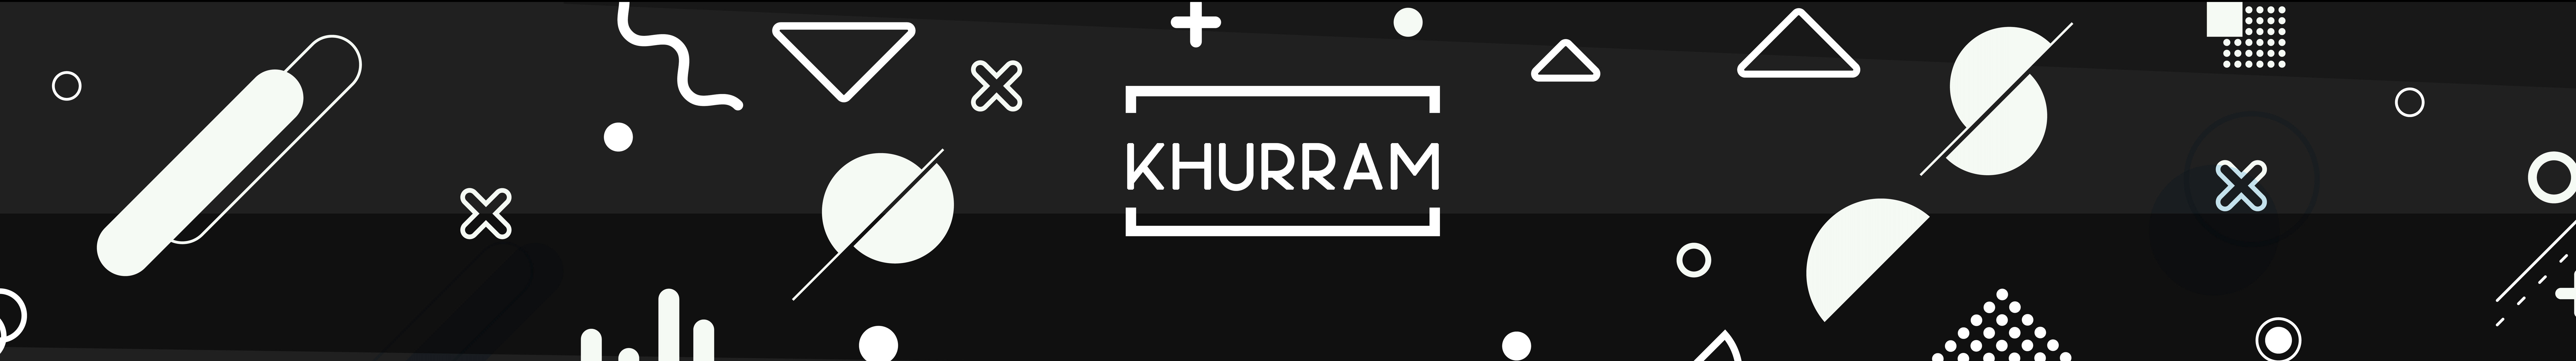 Khurram Shahzad's profile banner